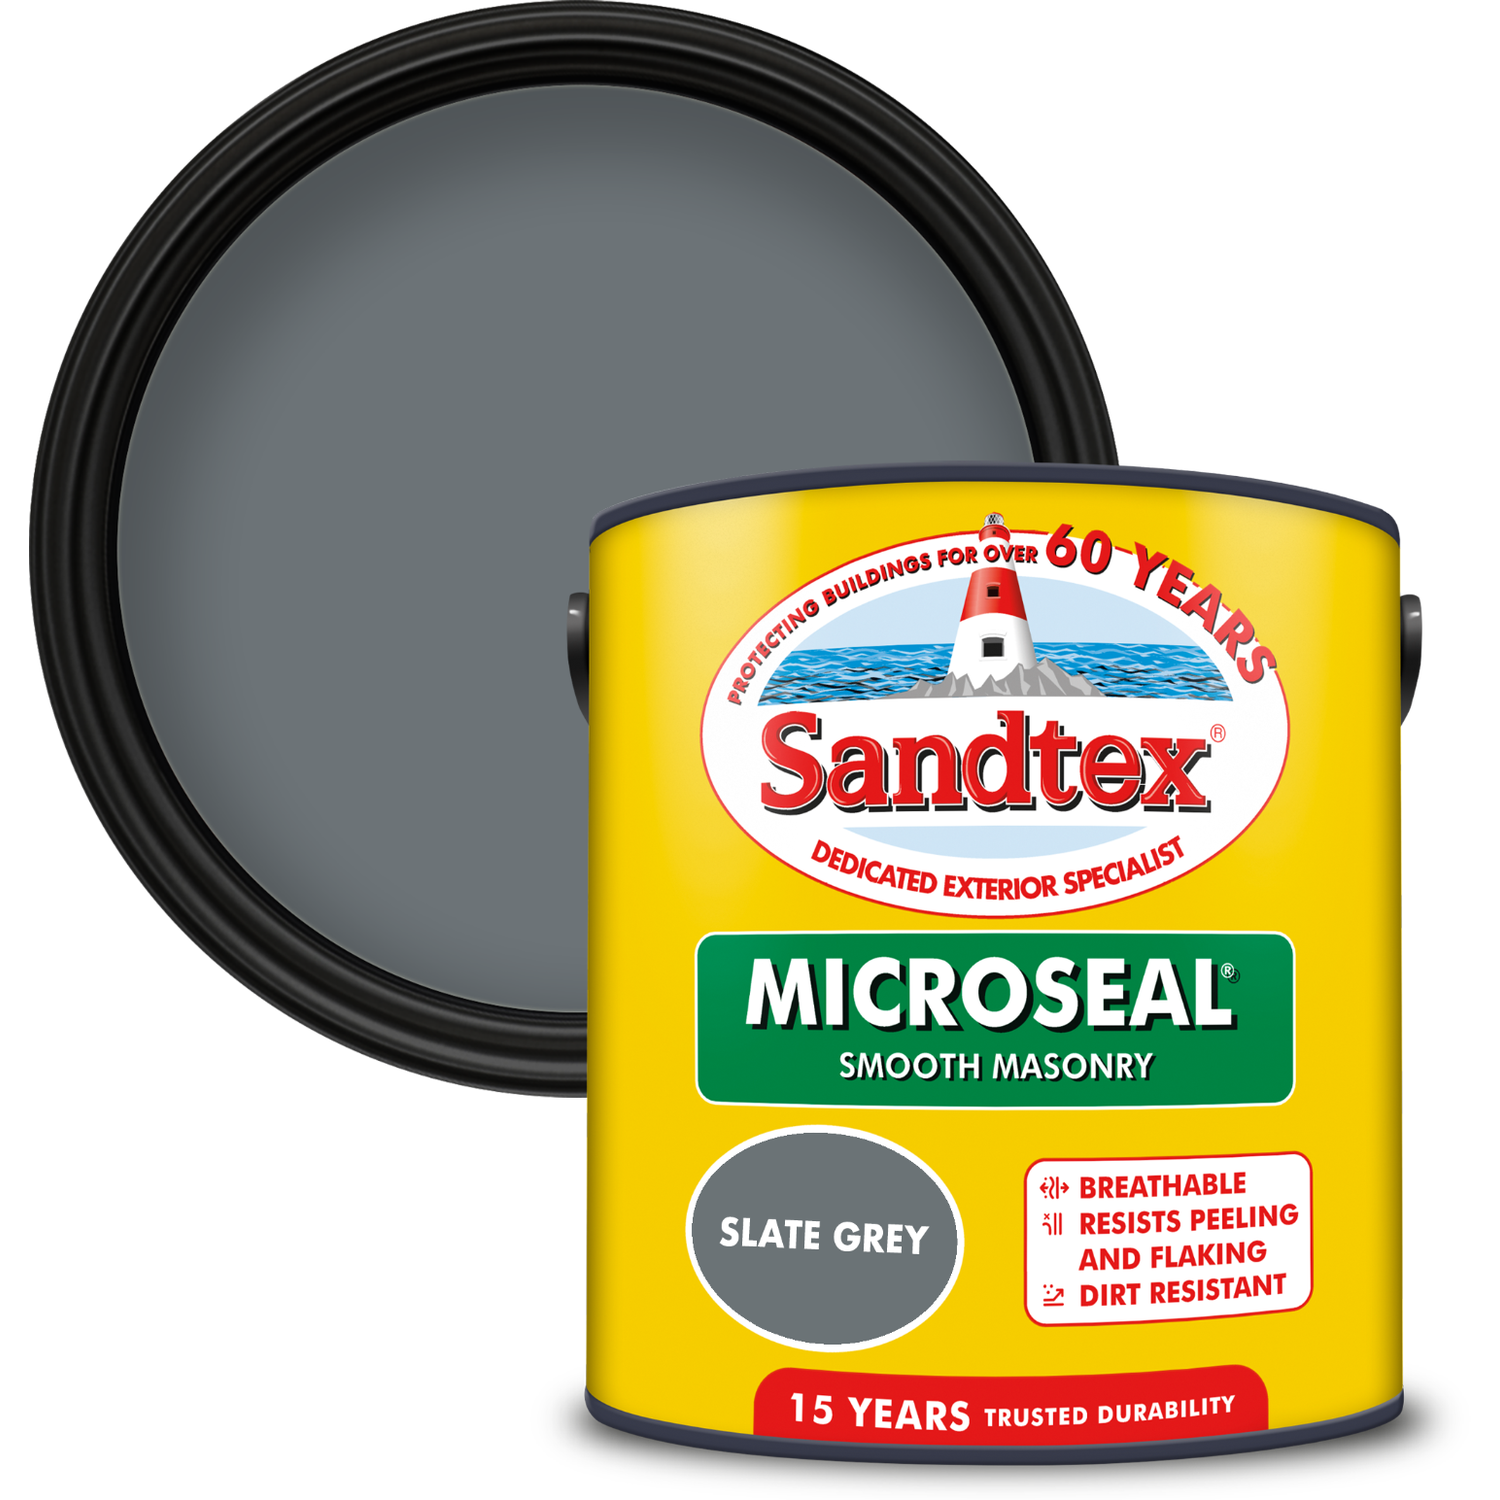 Sandtex Walls Slate Grey Microseal Smooth Masonry Matt Paint 5L Image 1